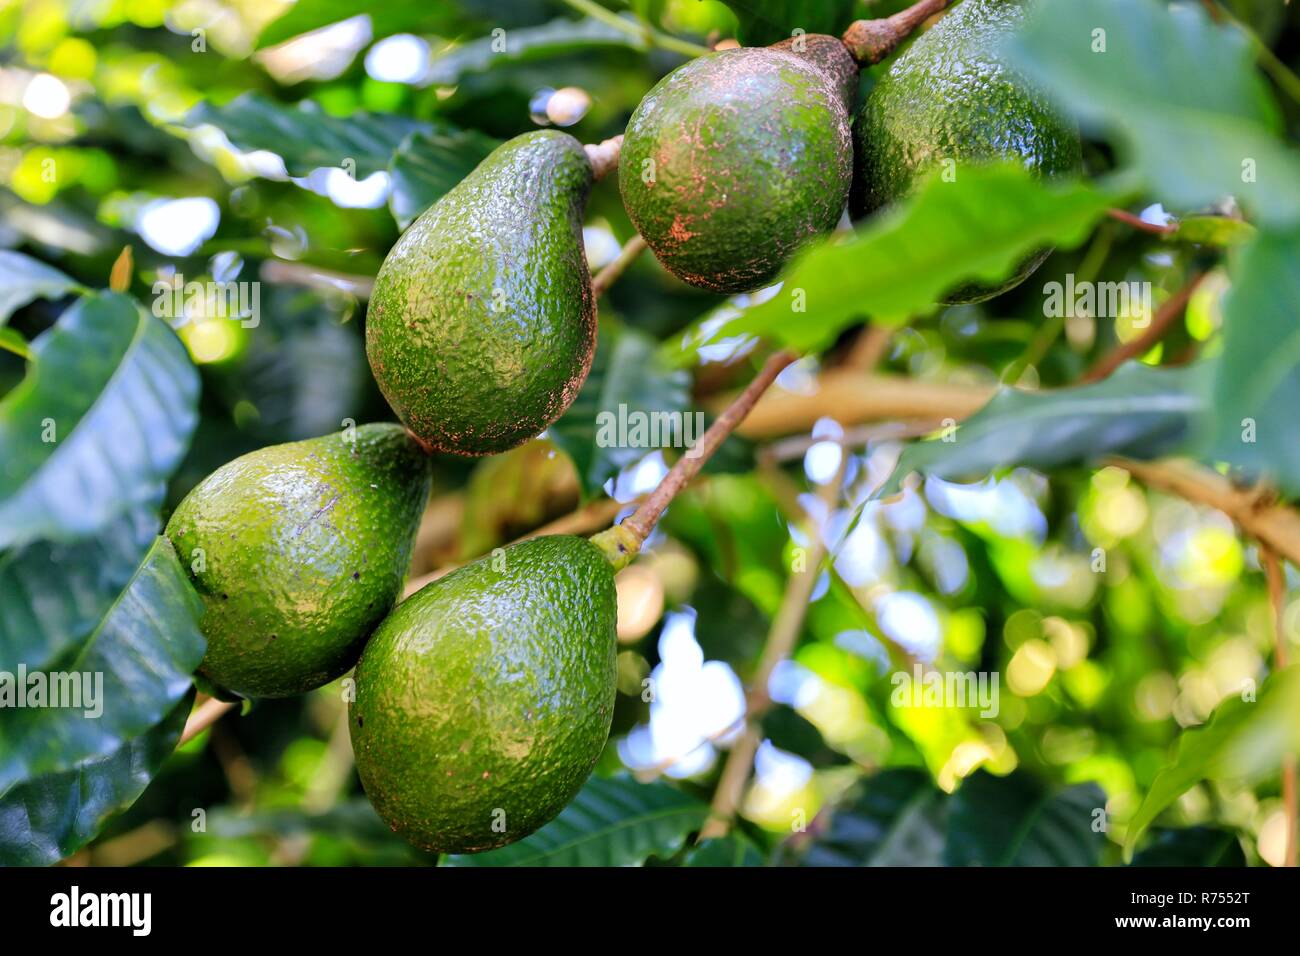 Fruit Trees - Home Gardening Apple, Cherry, Pear, Plum: Avocado Tree